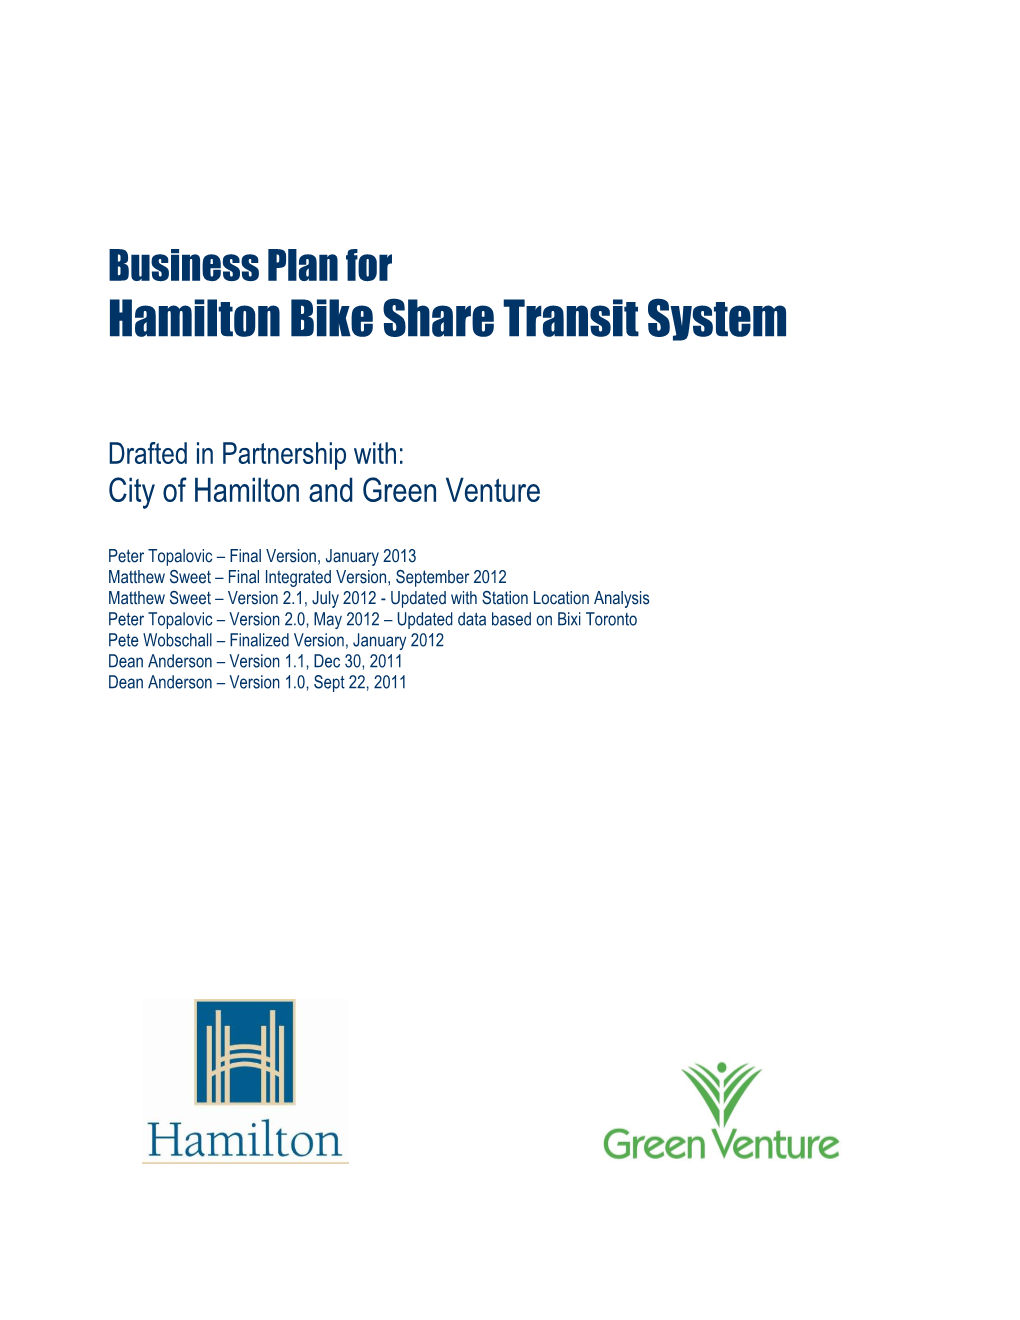 Business Plan for Hamilton Bike Share Transit System